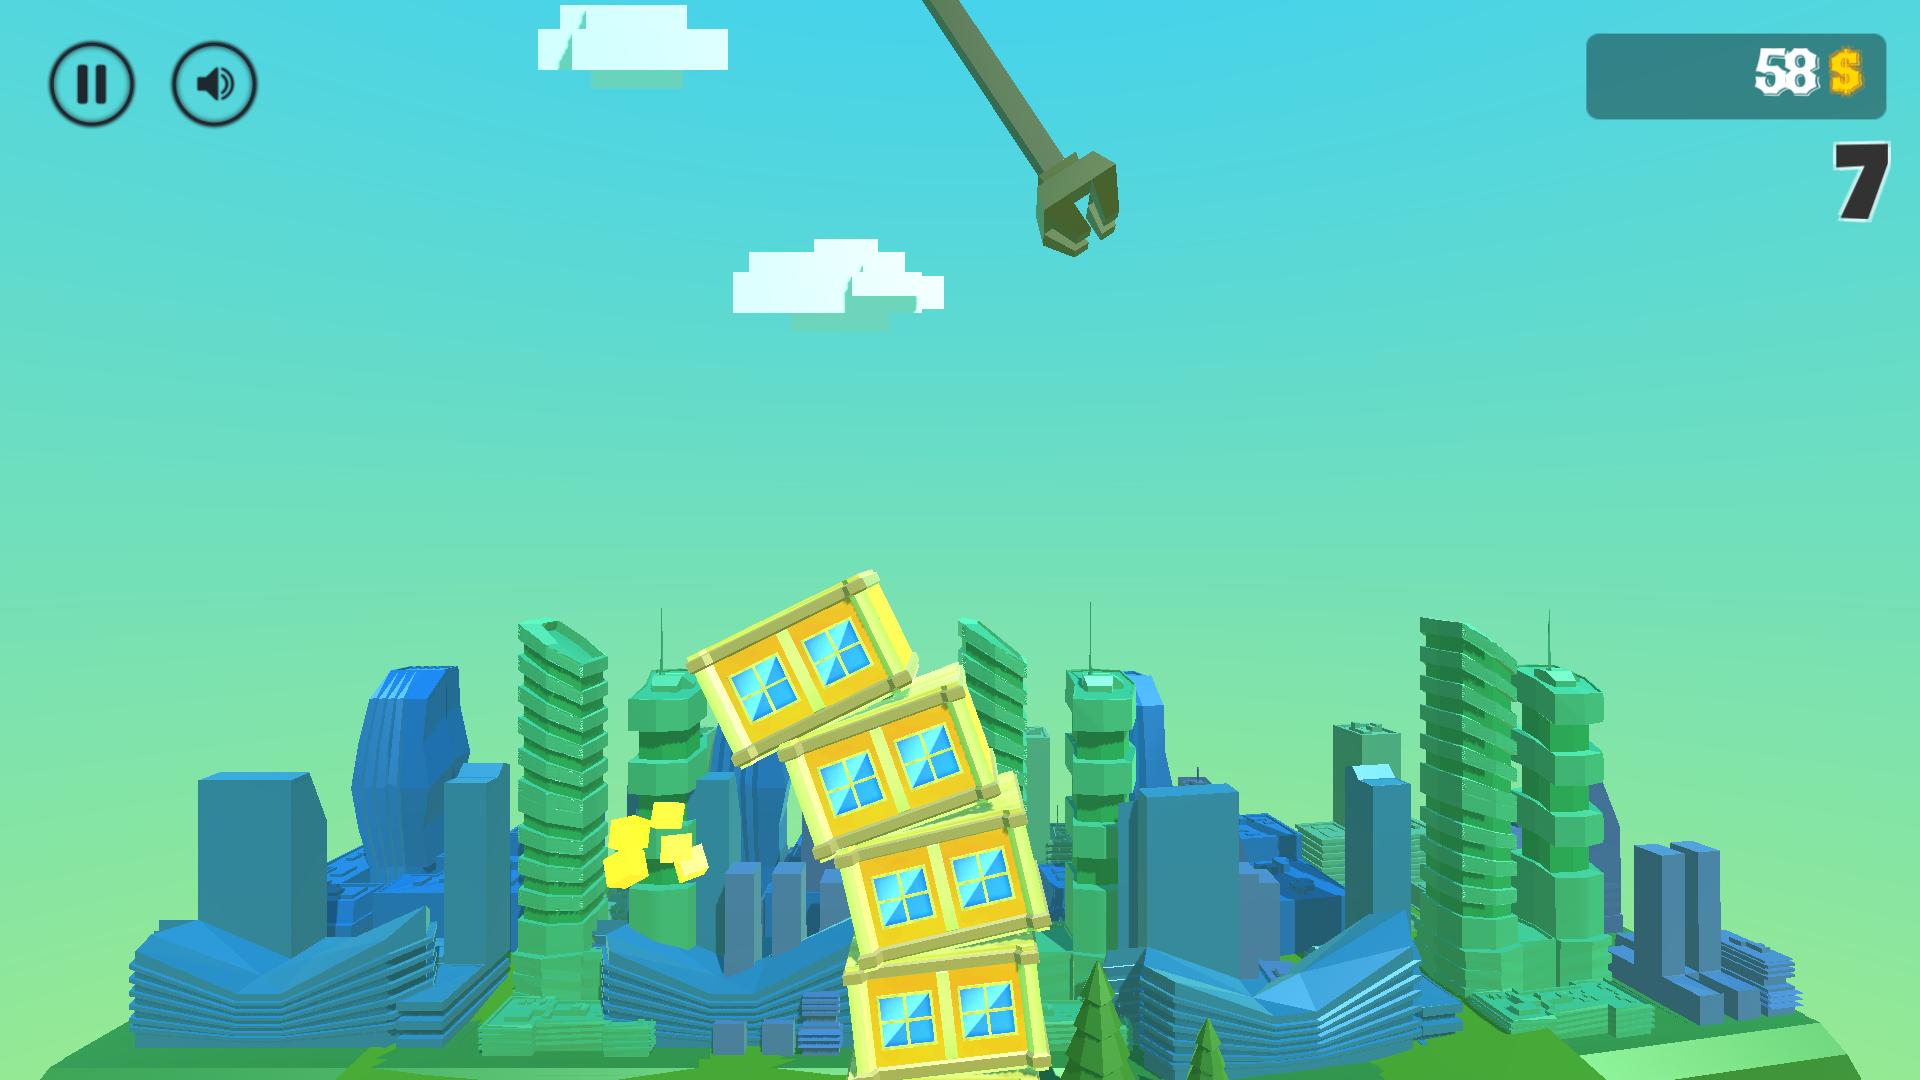 3 башни играть. Игра Tower Bloxx. Tower Bloxx City. Tower build игра. Tower building игра Android.